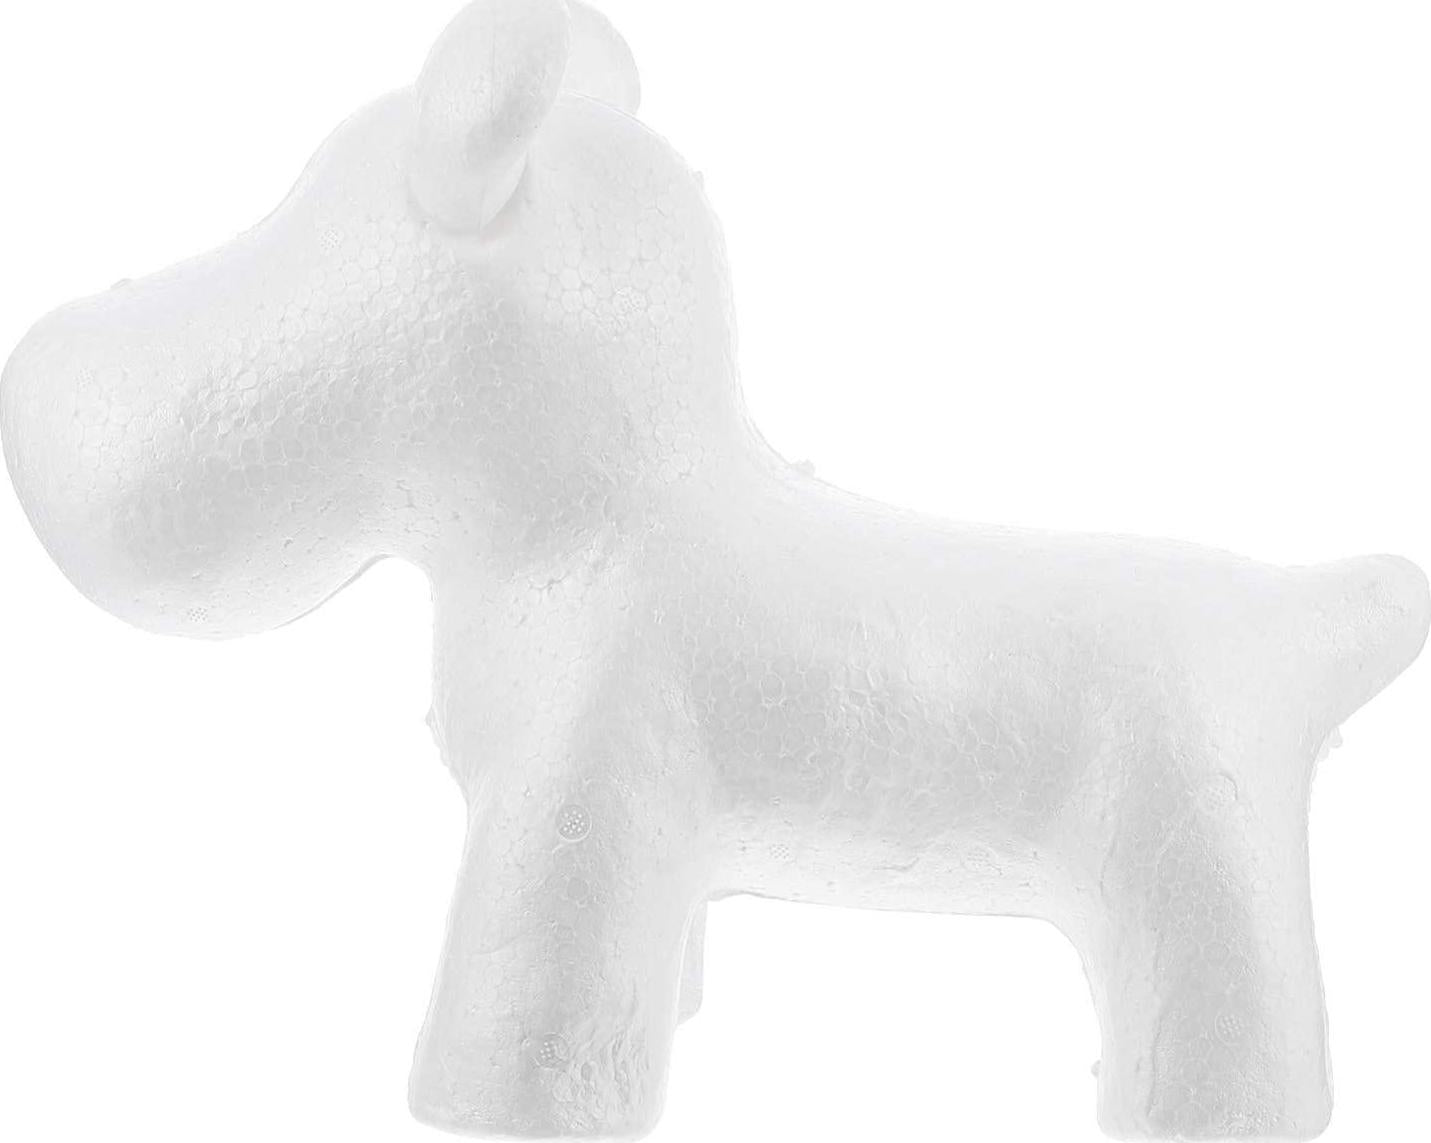 EXCEART, EXCEART Styrofoam Polystyrene Modelling Foam Polystyrene Dog Shapes White Craft Foam Balls for DIY Rose Puppy Flower Decor Christmas Centerpiece Craft Art Supplies